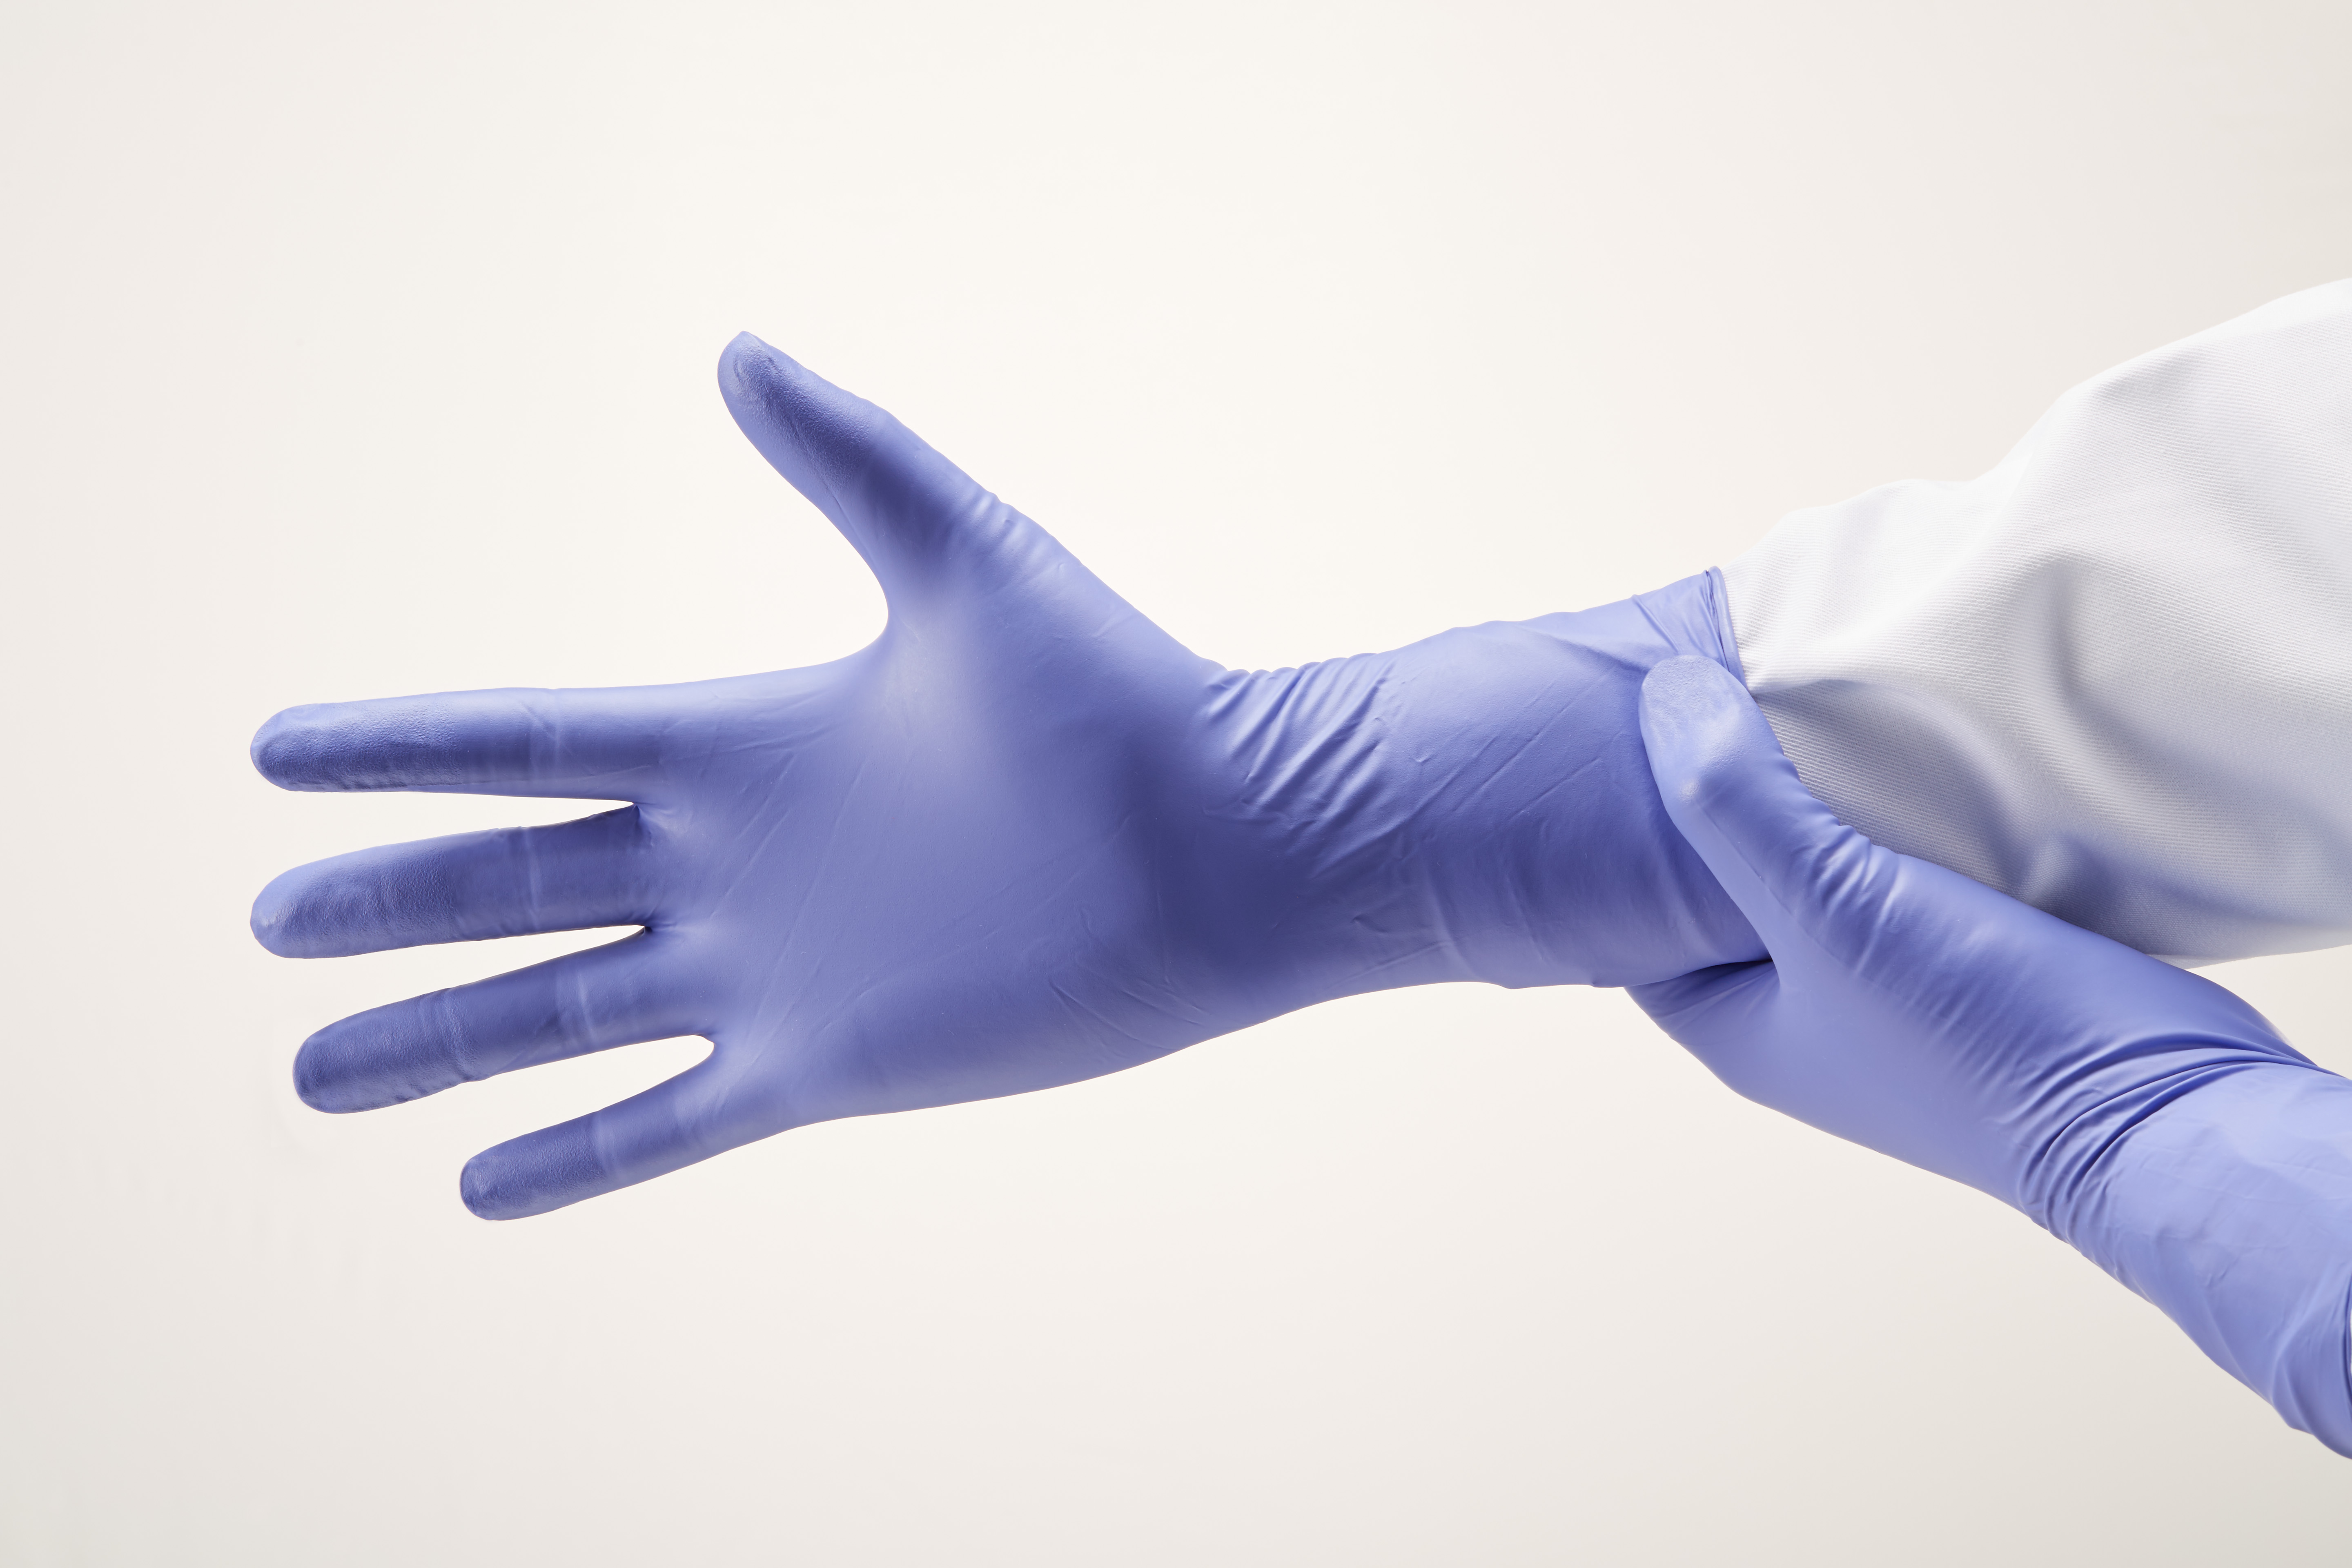 StarGuard / Microflex Protect+ Nitrile Gloves, Powder Free, Violet-Blue, Size M, Pk/ 10 x 50 gloves.